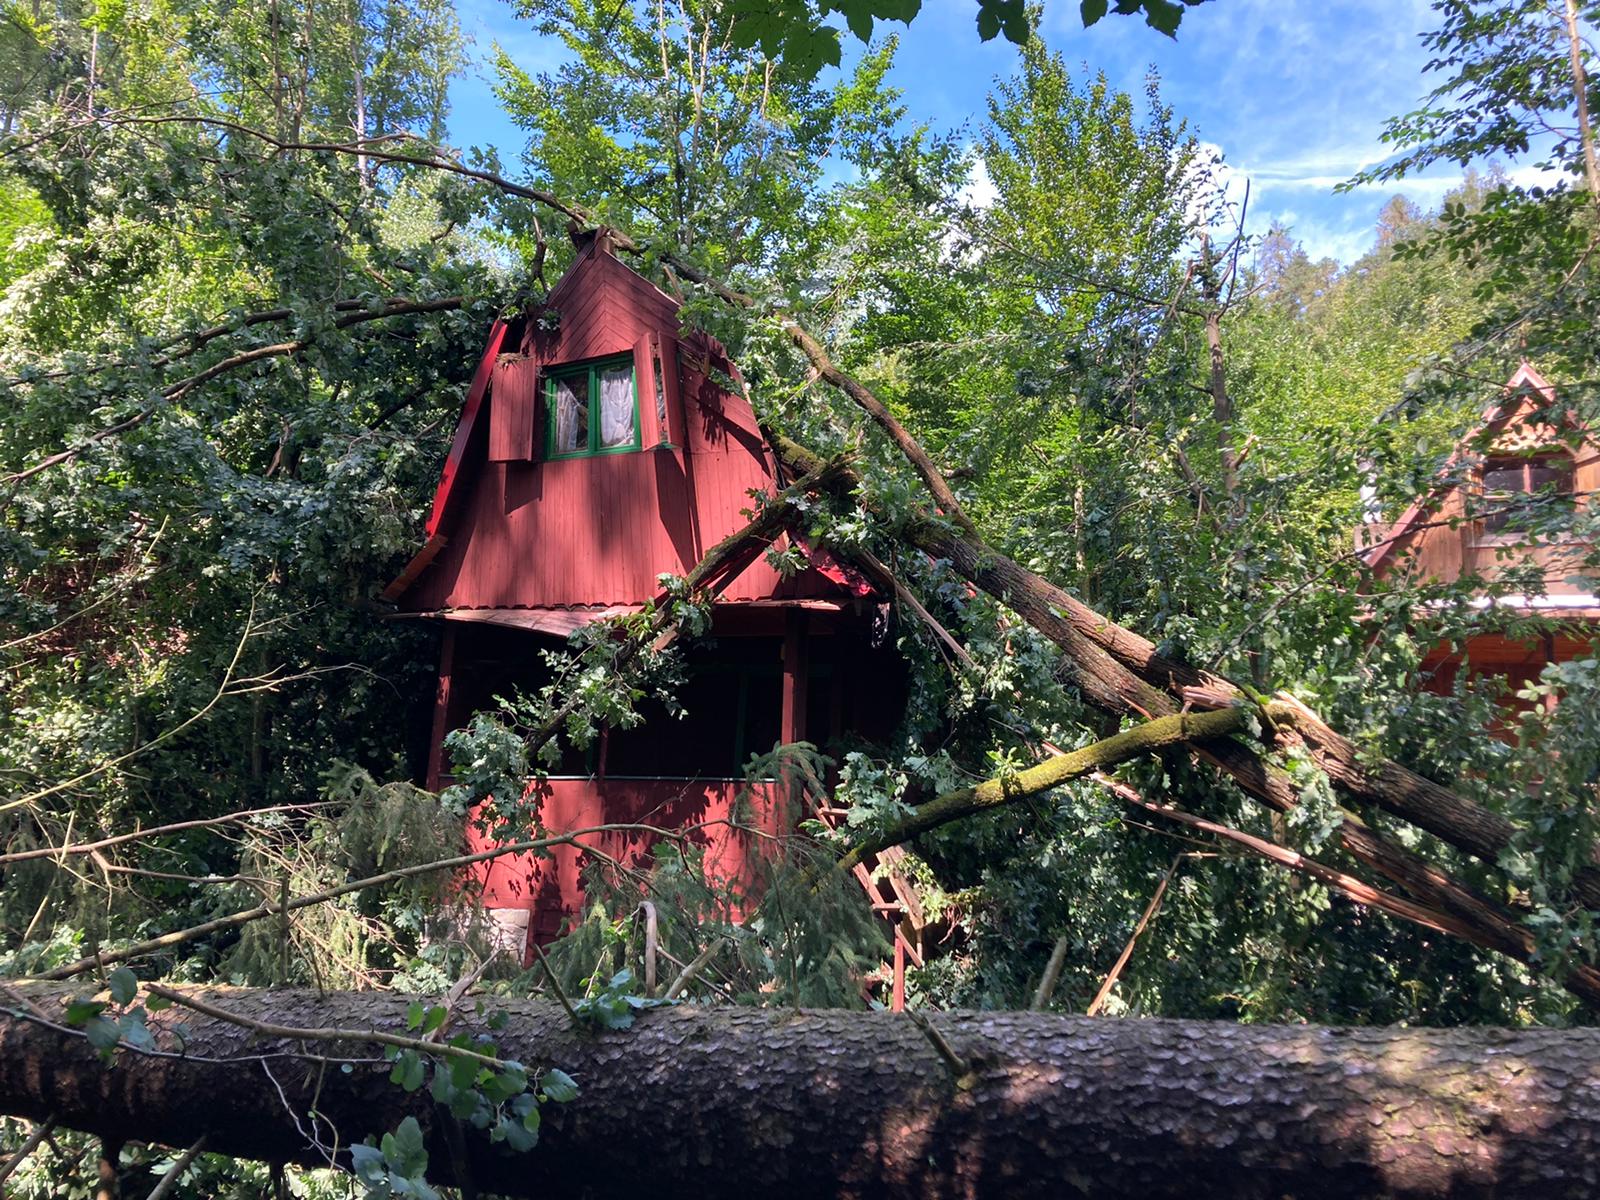 113-Popadané stromy po letní bouřce v chatové oblasti u Senohrab.jpg